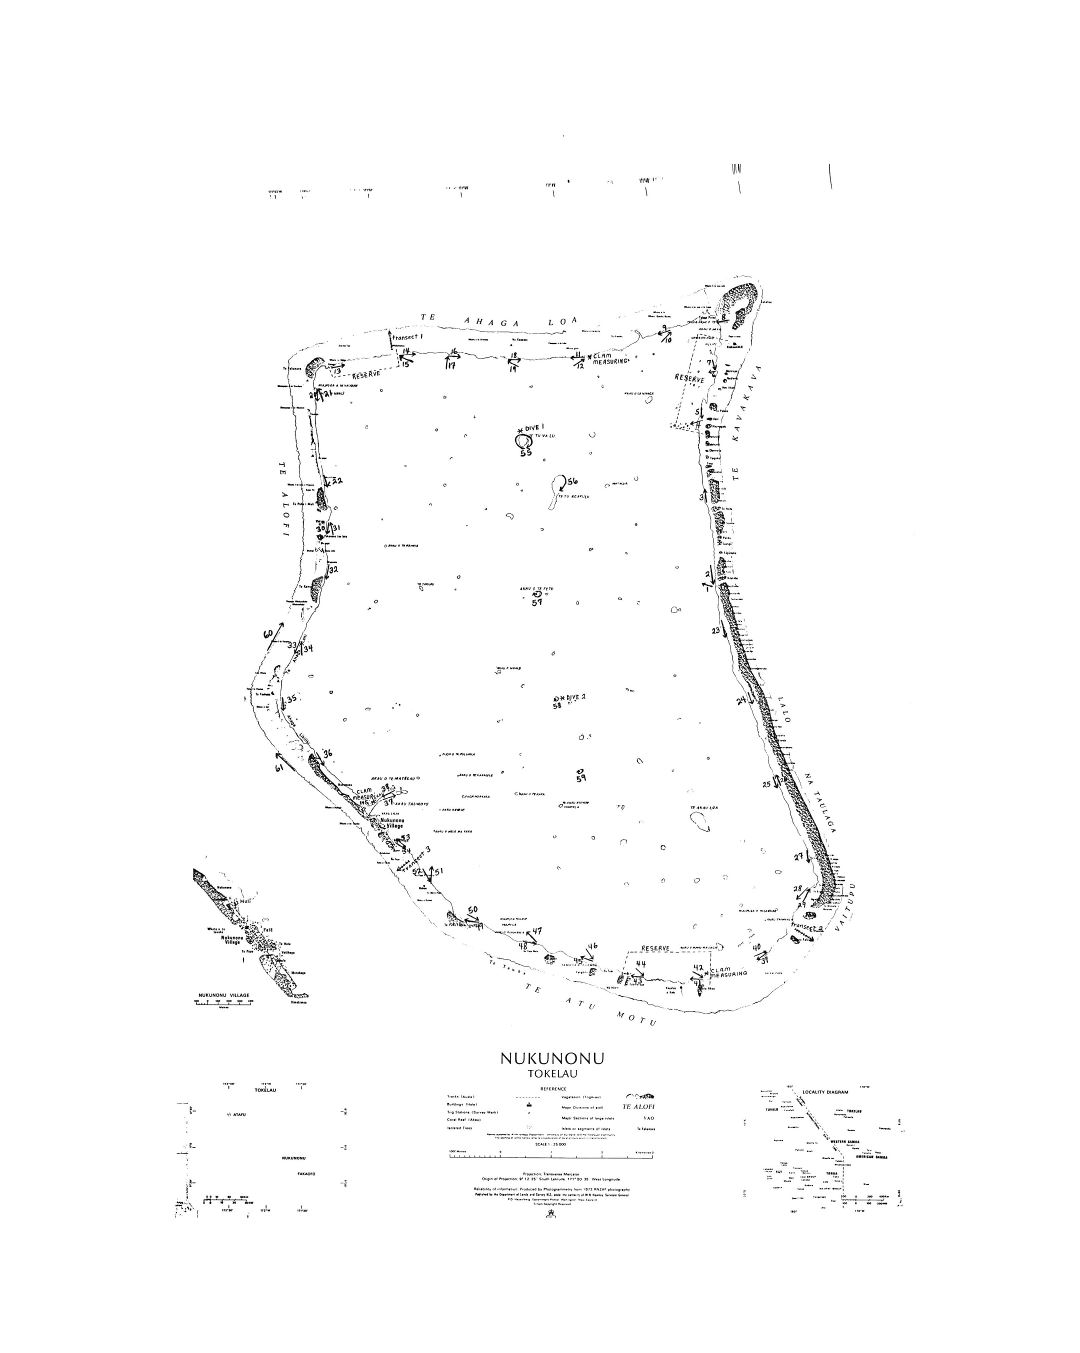 Large scale map of Nukunonu Atoll, Tokelau